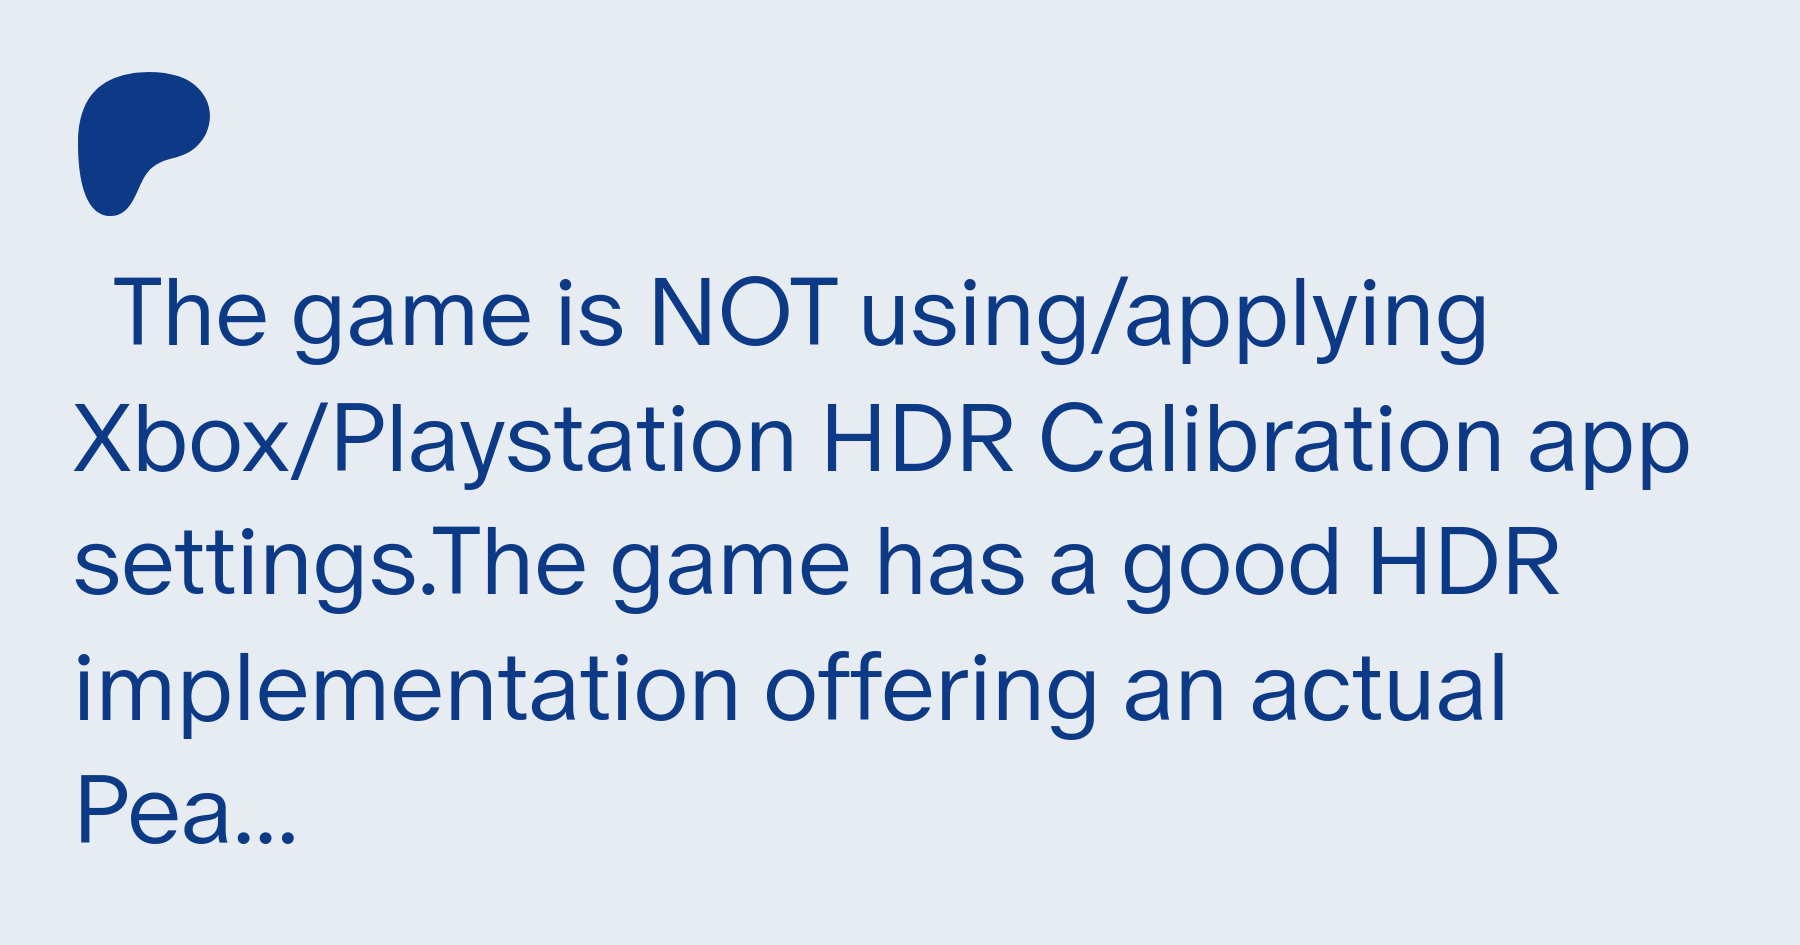 Far Cry 5 - HDR Settings